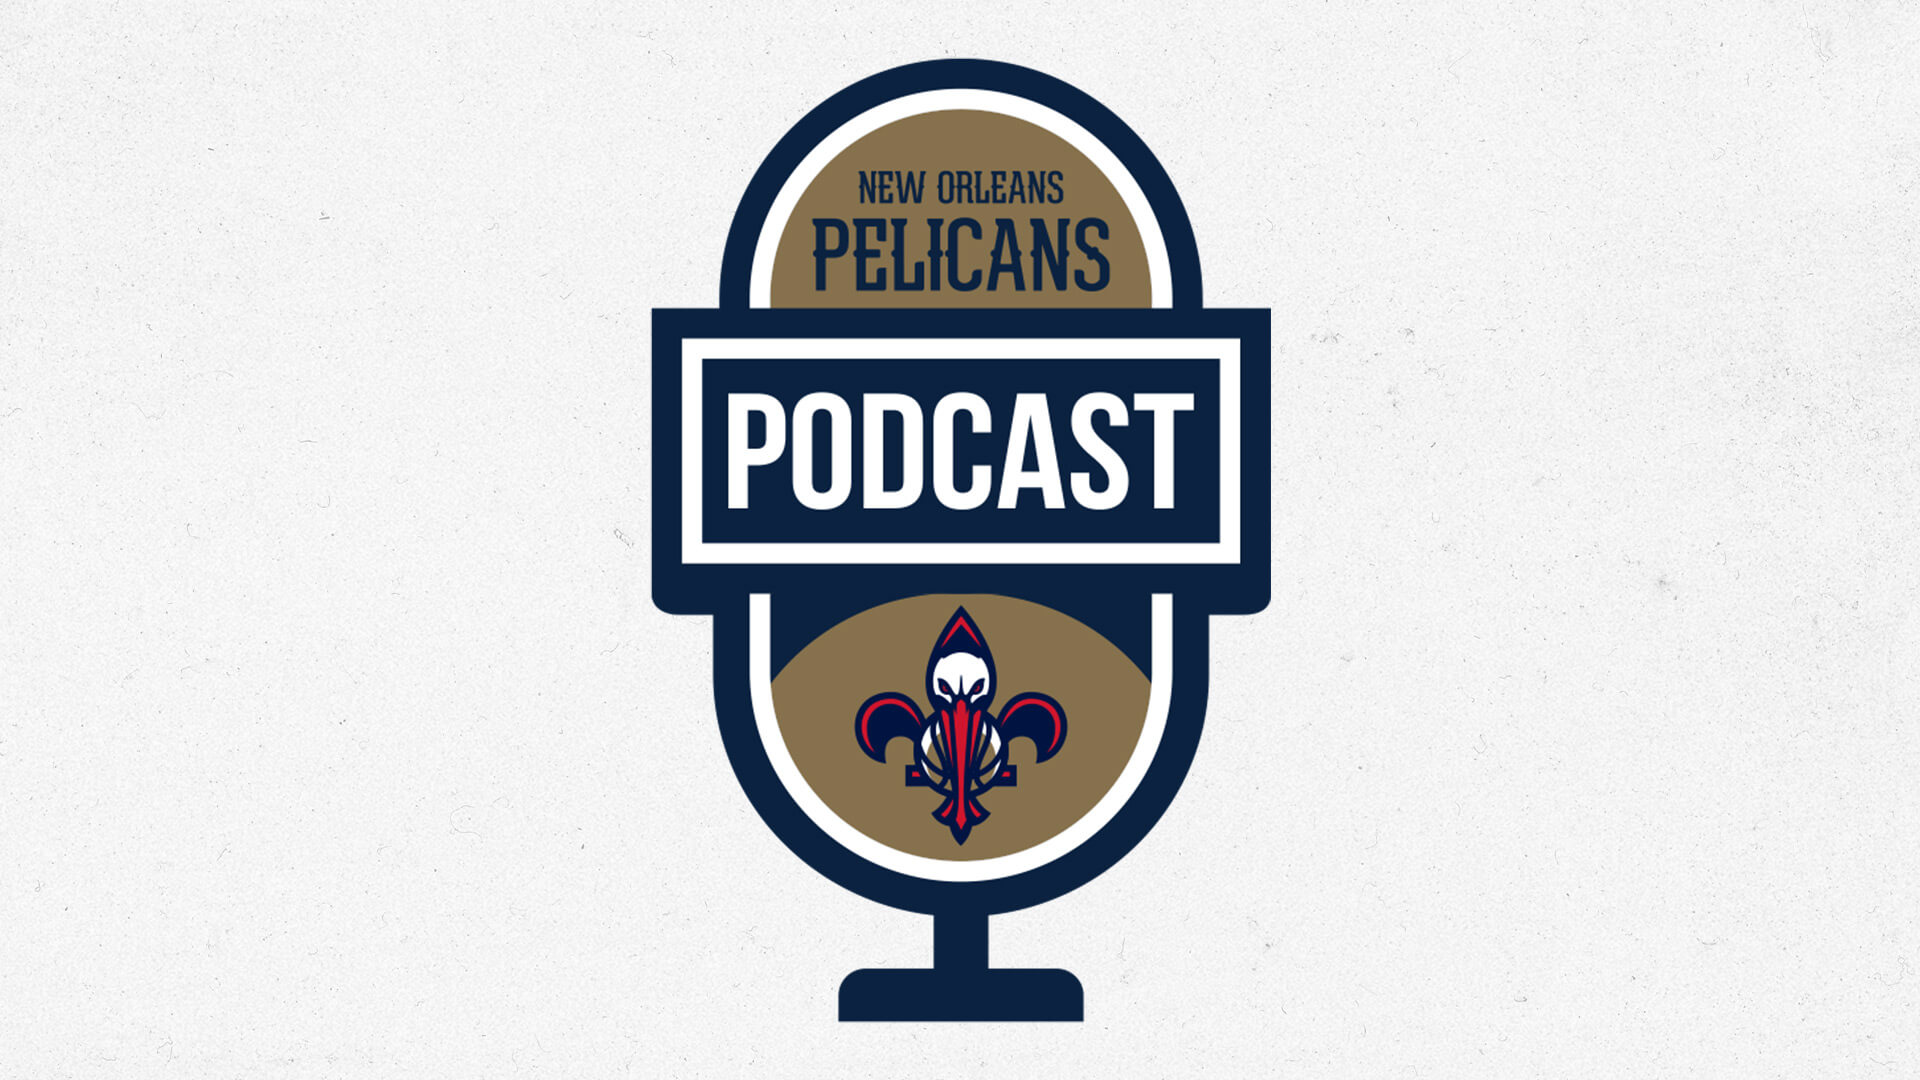 Suns vs. Pelicans recap, NBA playoff picture, Zion Williamson | Pelicans Podcast